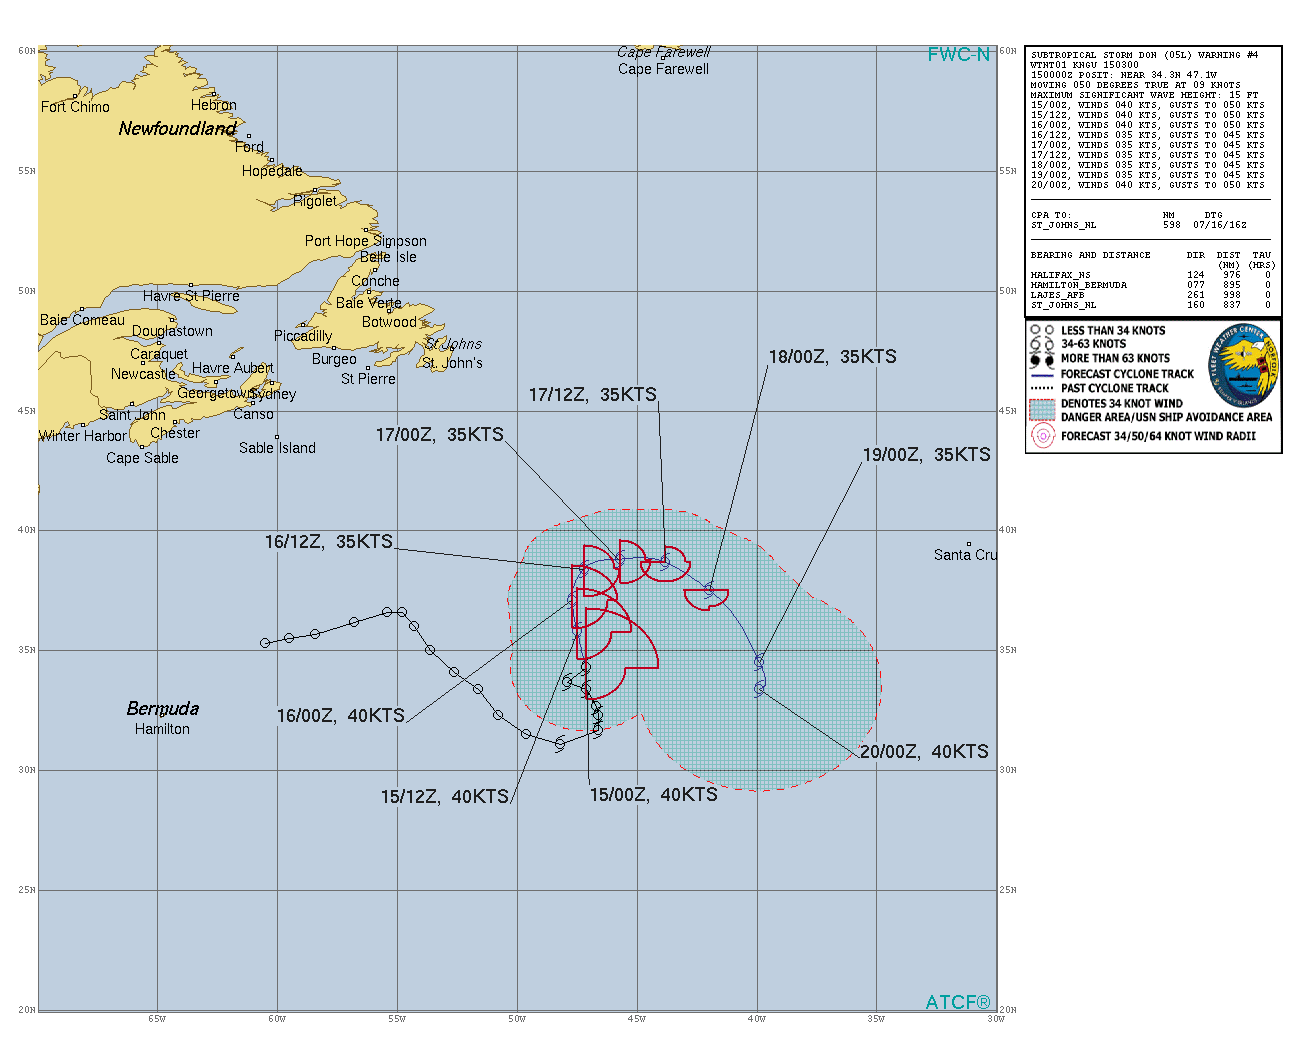 South China Sea: TS 04W forecast to reach Typhoon intensity by 24h//HU 03E(CALVIN) peaked at CAT 3 US// SS 05L(DON)//1506utc